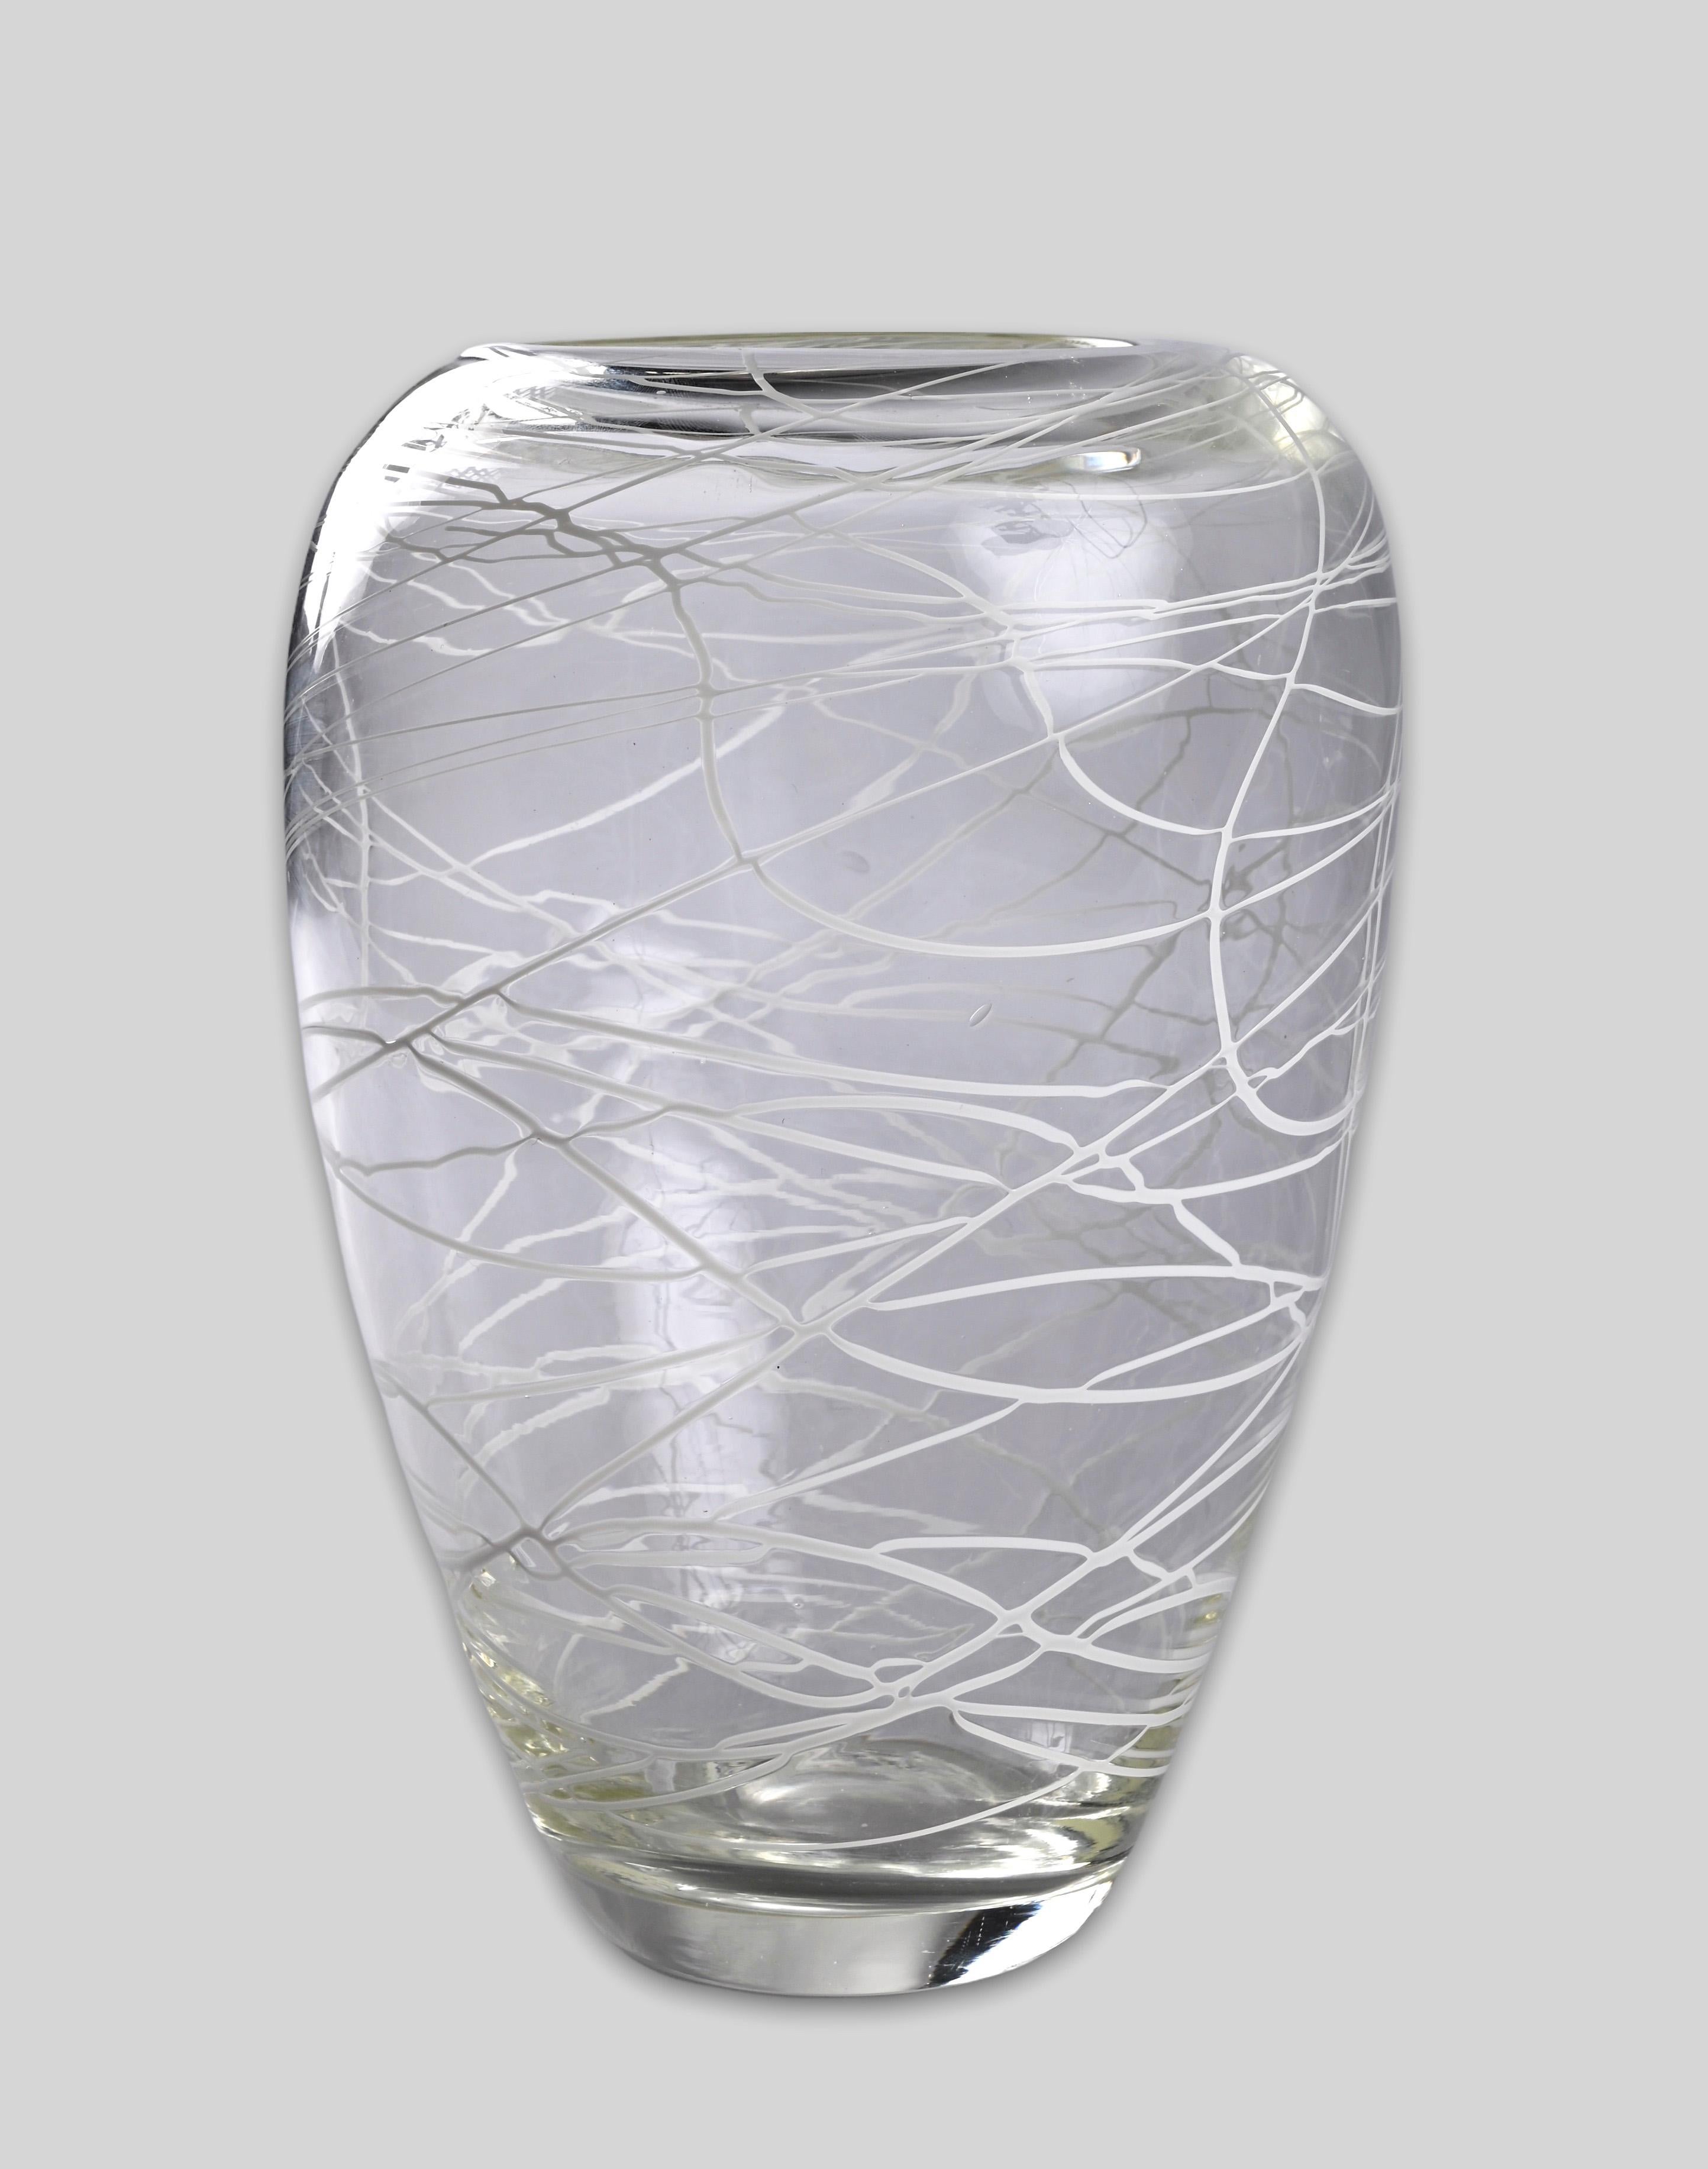 Decorative Vase in Crystal Murano Glass, Italy, Scarpa, 1970s For Sale 8